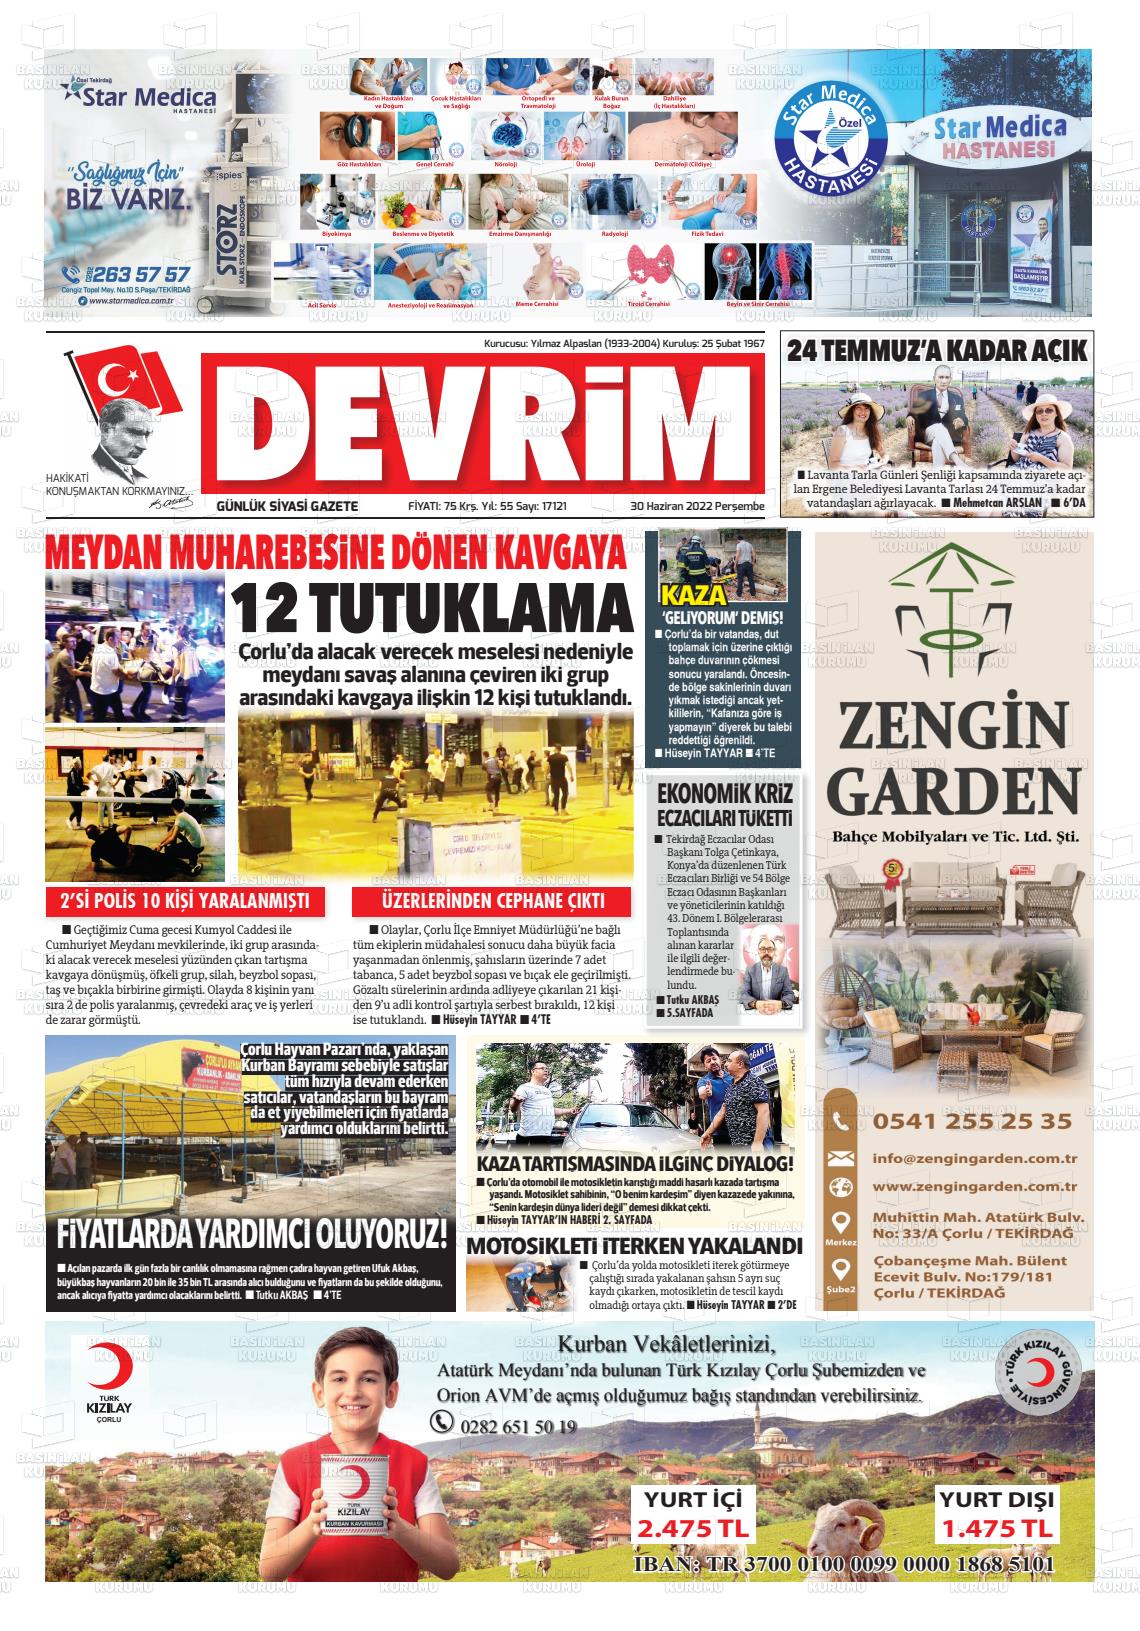 01 Temmuz 2022 Devrim Gazete Manşeti